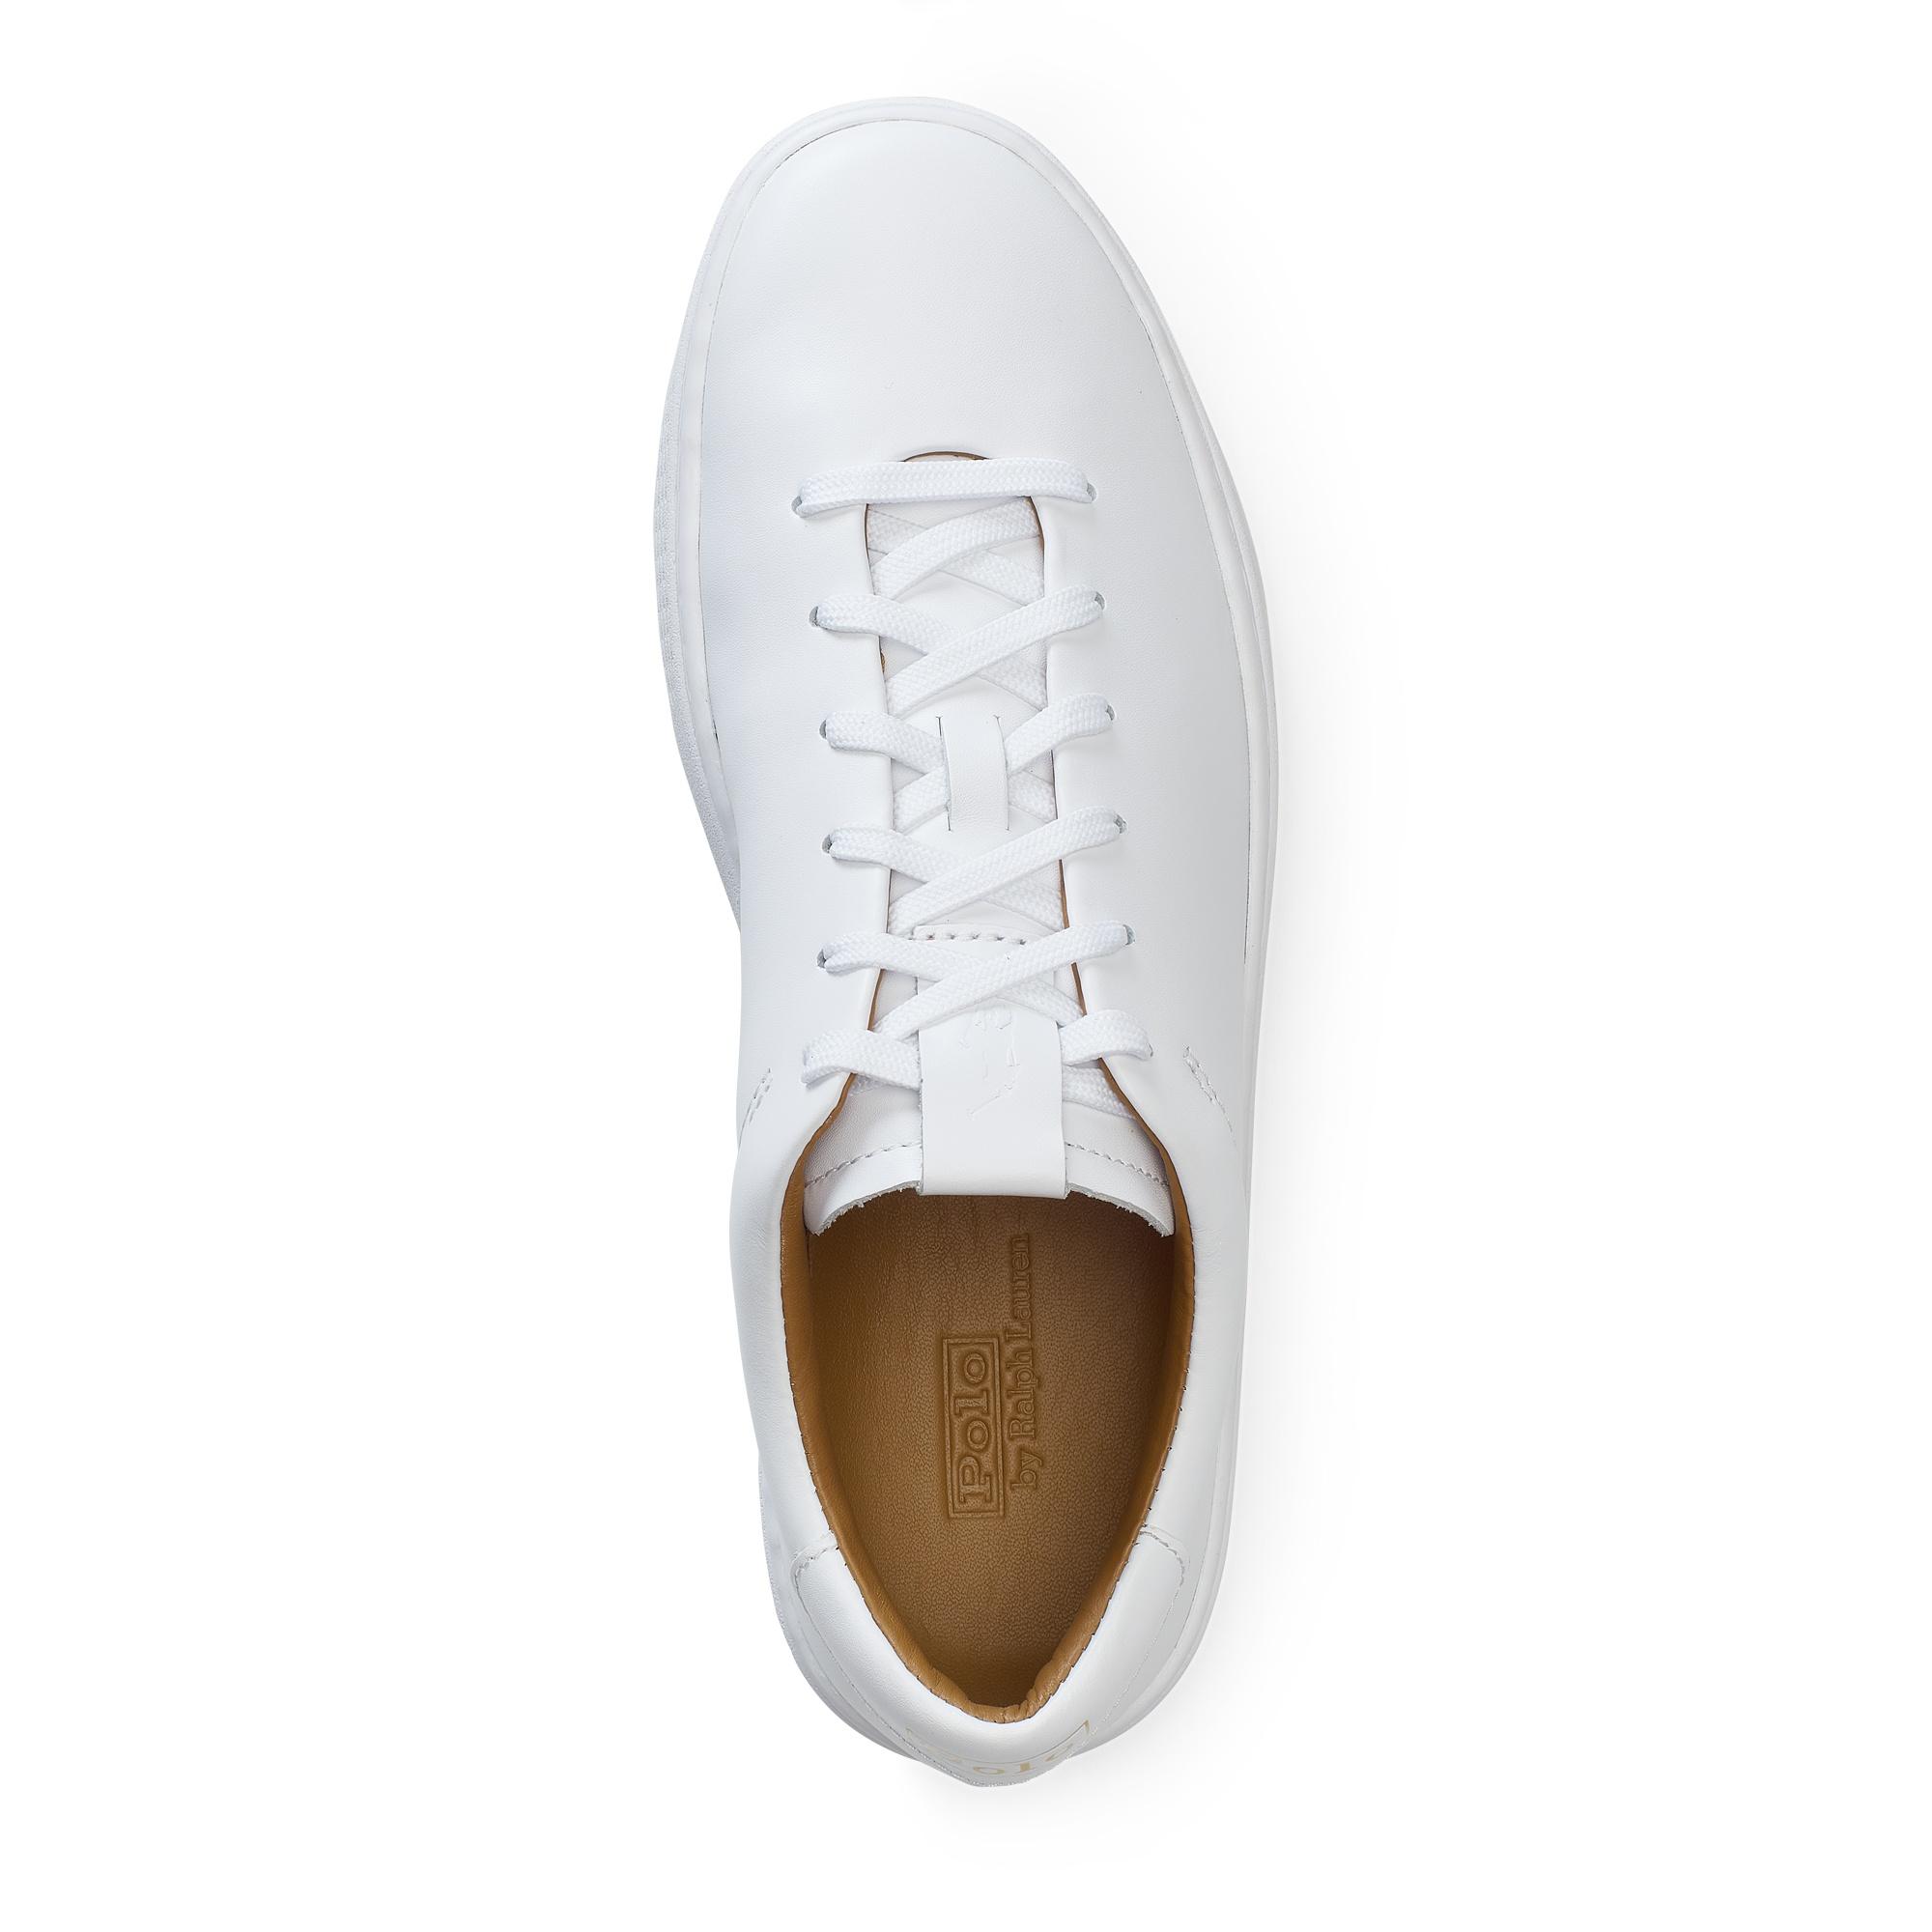 Ralph Lauren Court 125 Leather Sneaker in White - Lyst